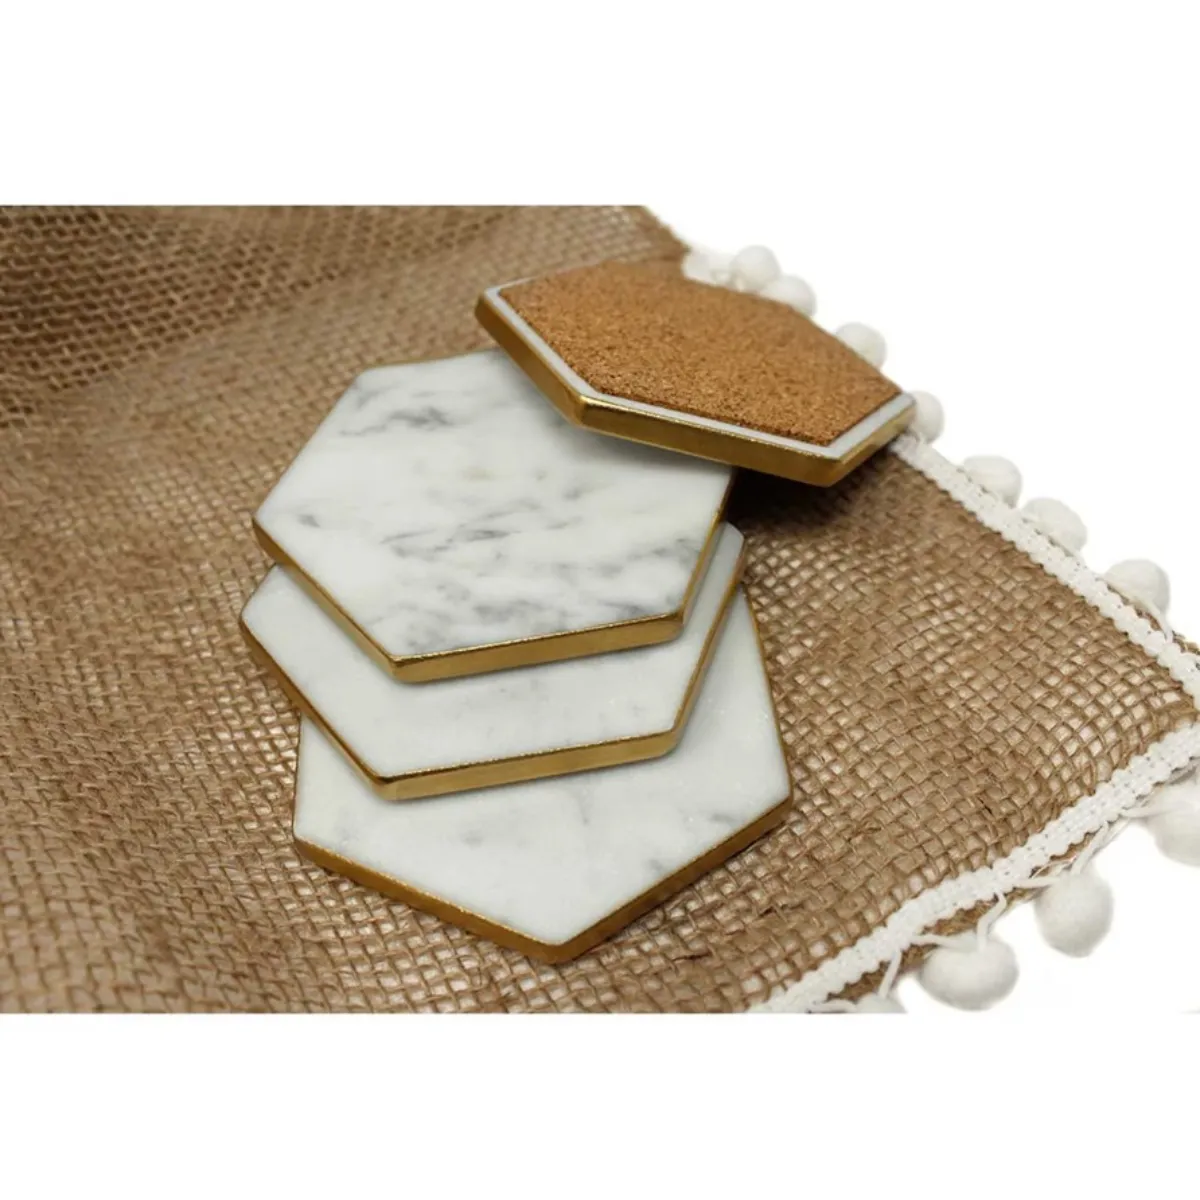 Polymetical Acrílico Coaster Tabletop Mats e Pads Design Simples Chá Bebida Ware Placemats Coasters Para Venda Suprimentos